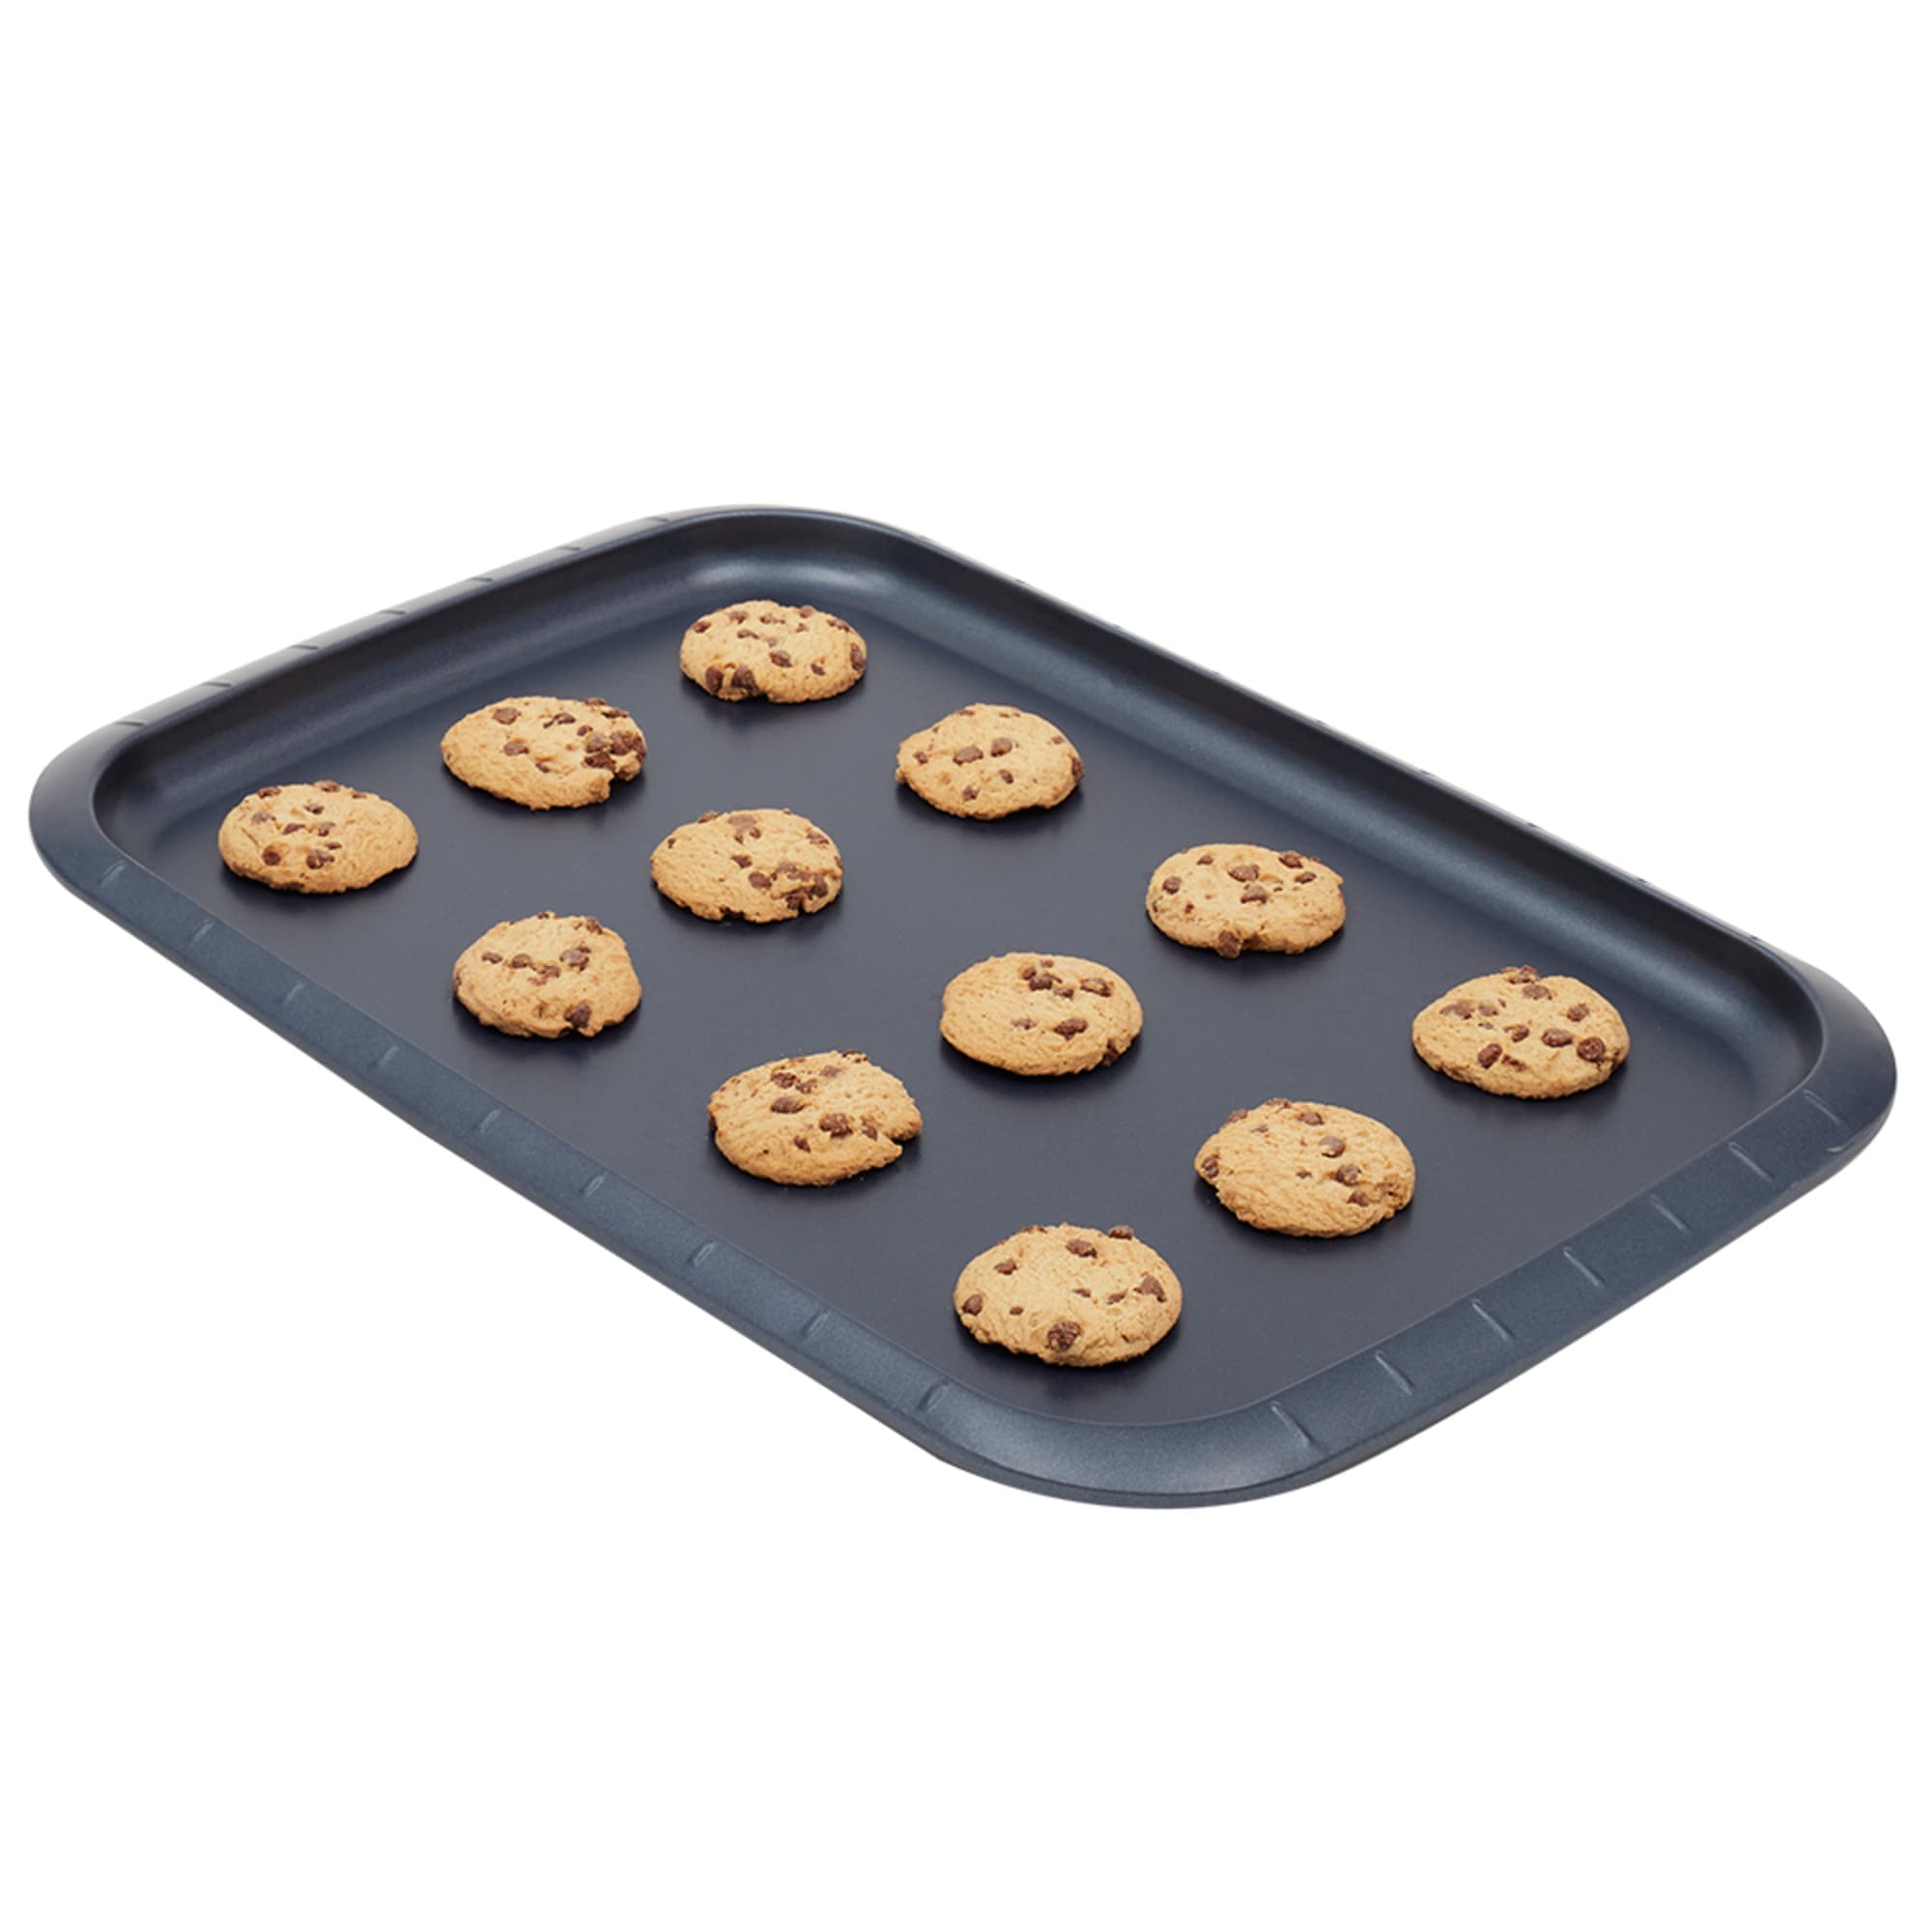 Norpro Non-Stick Cookie Baking Sheet 15X10 3995